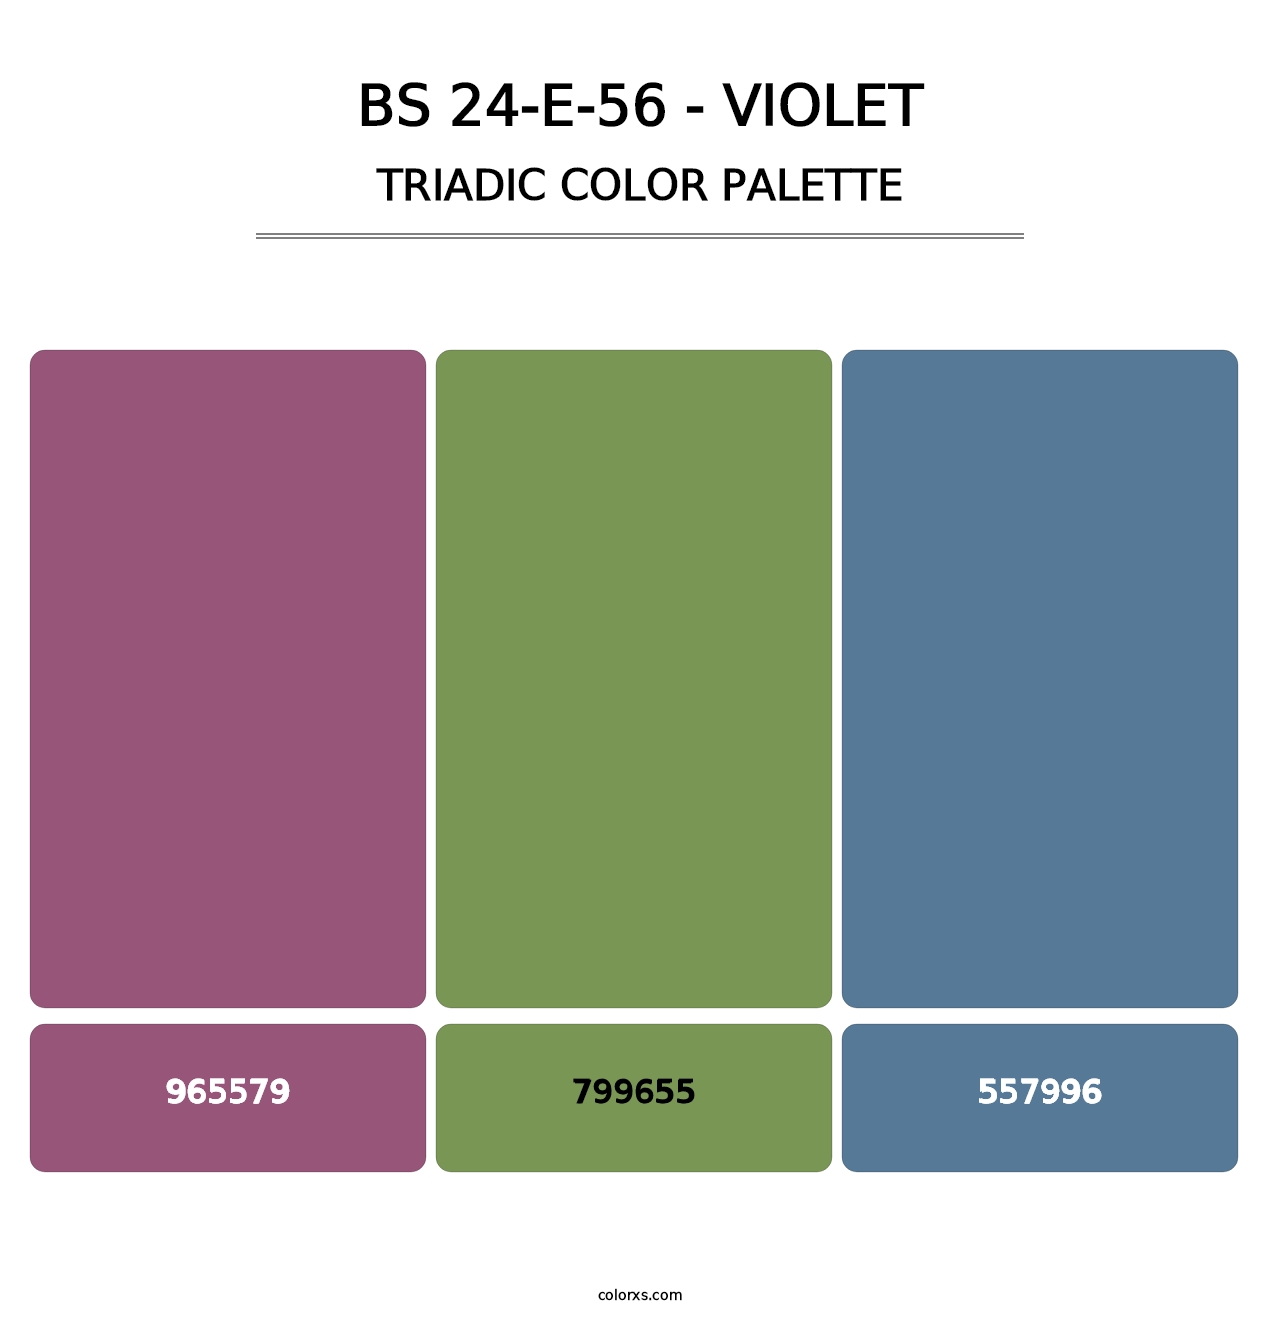 BS 24-E-56 - Violet - Triadic Color Palette